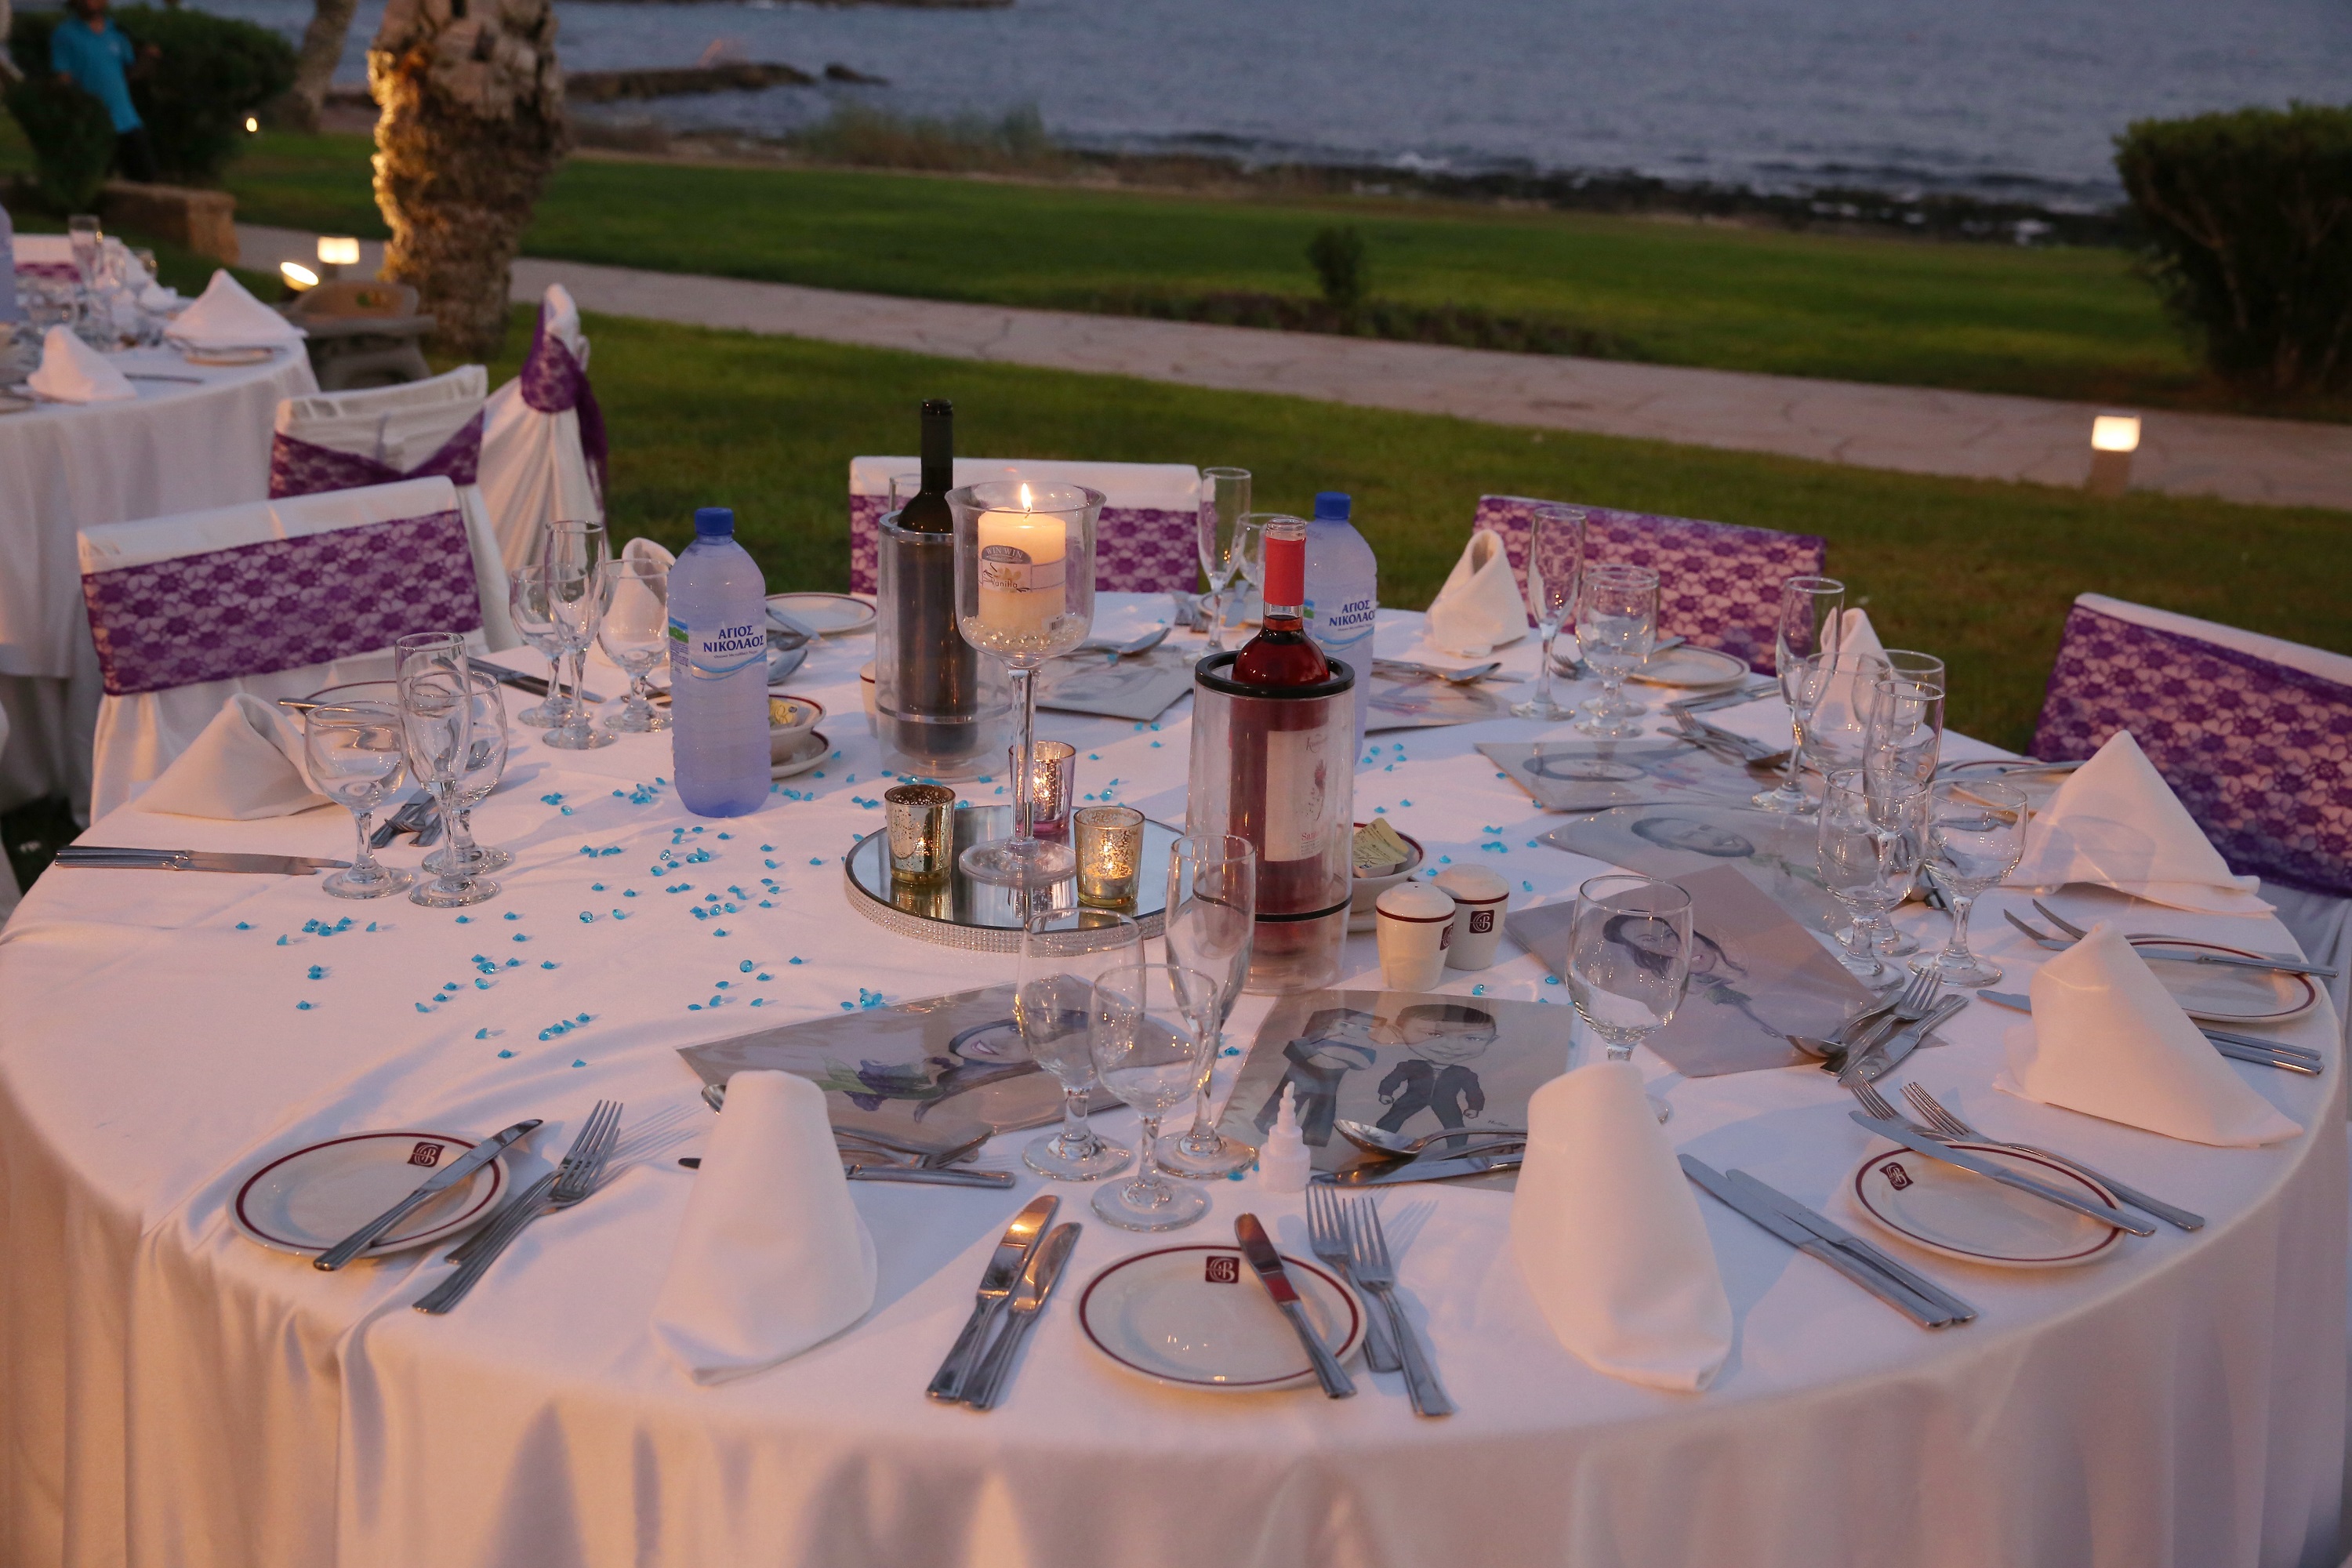 Book your wedding day in Constantinou Bros Athena Beach Hotel Paphos